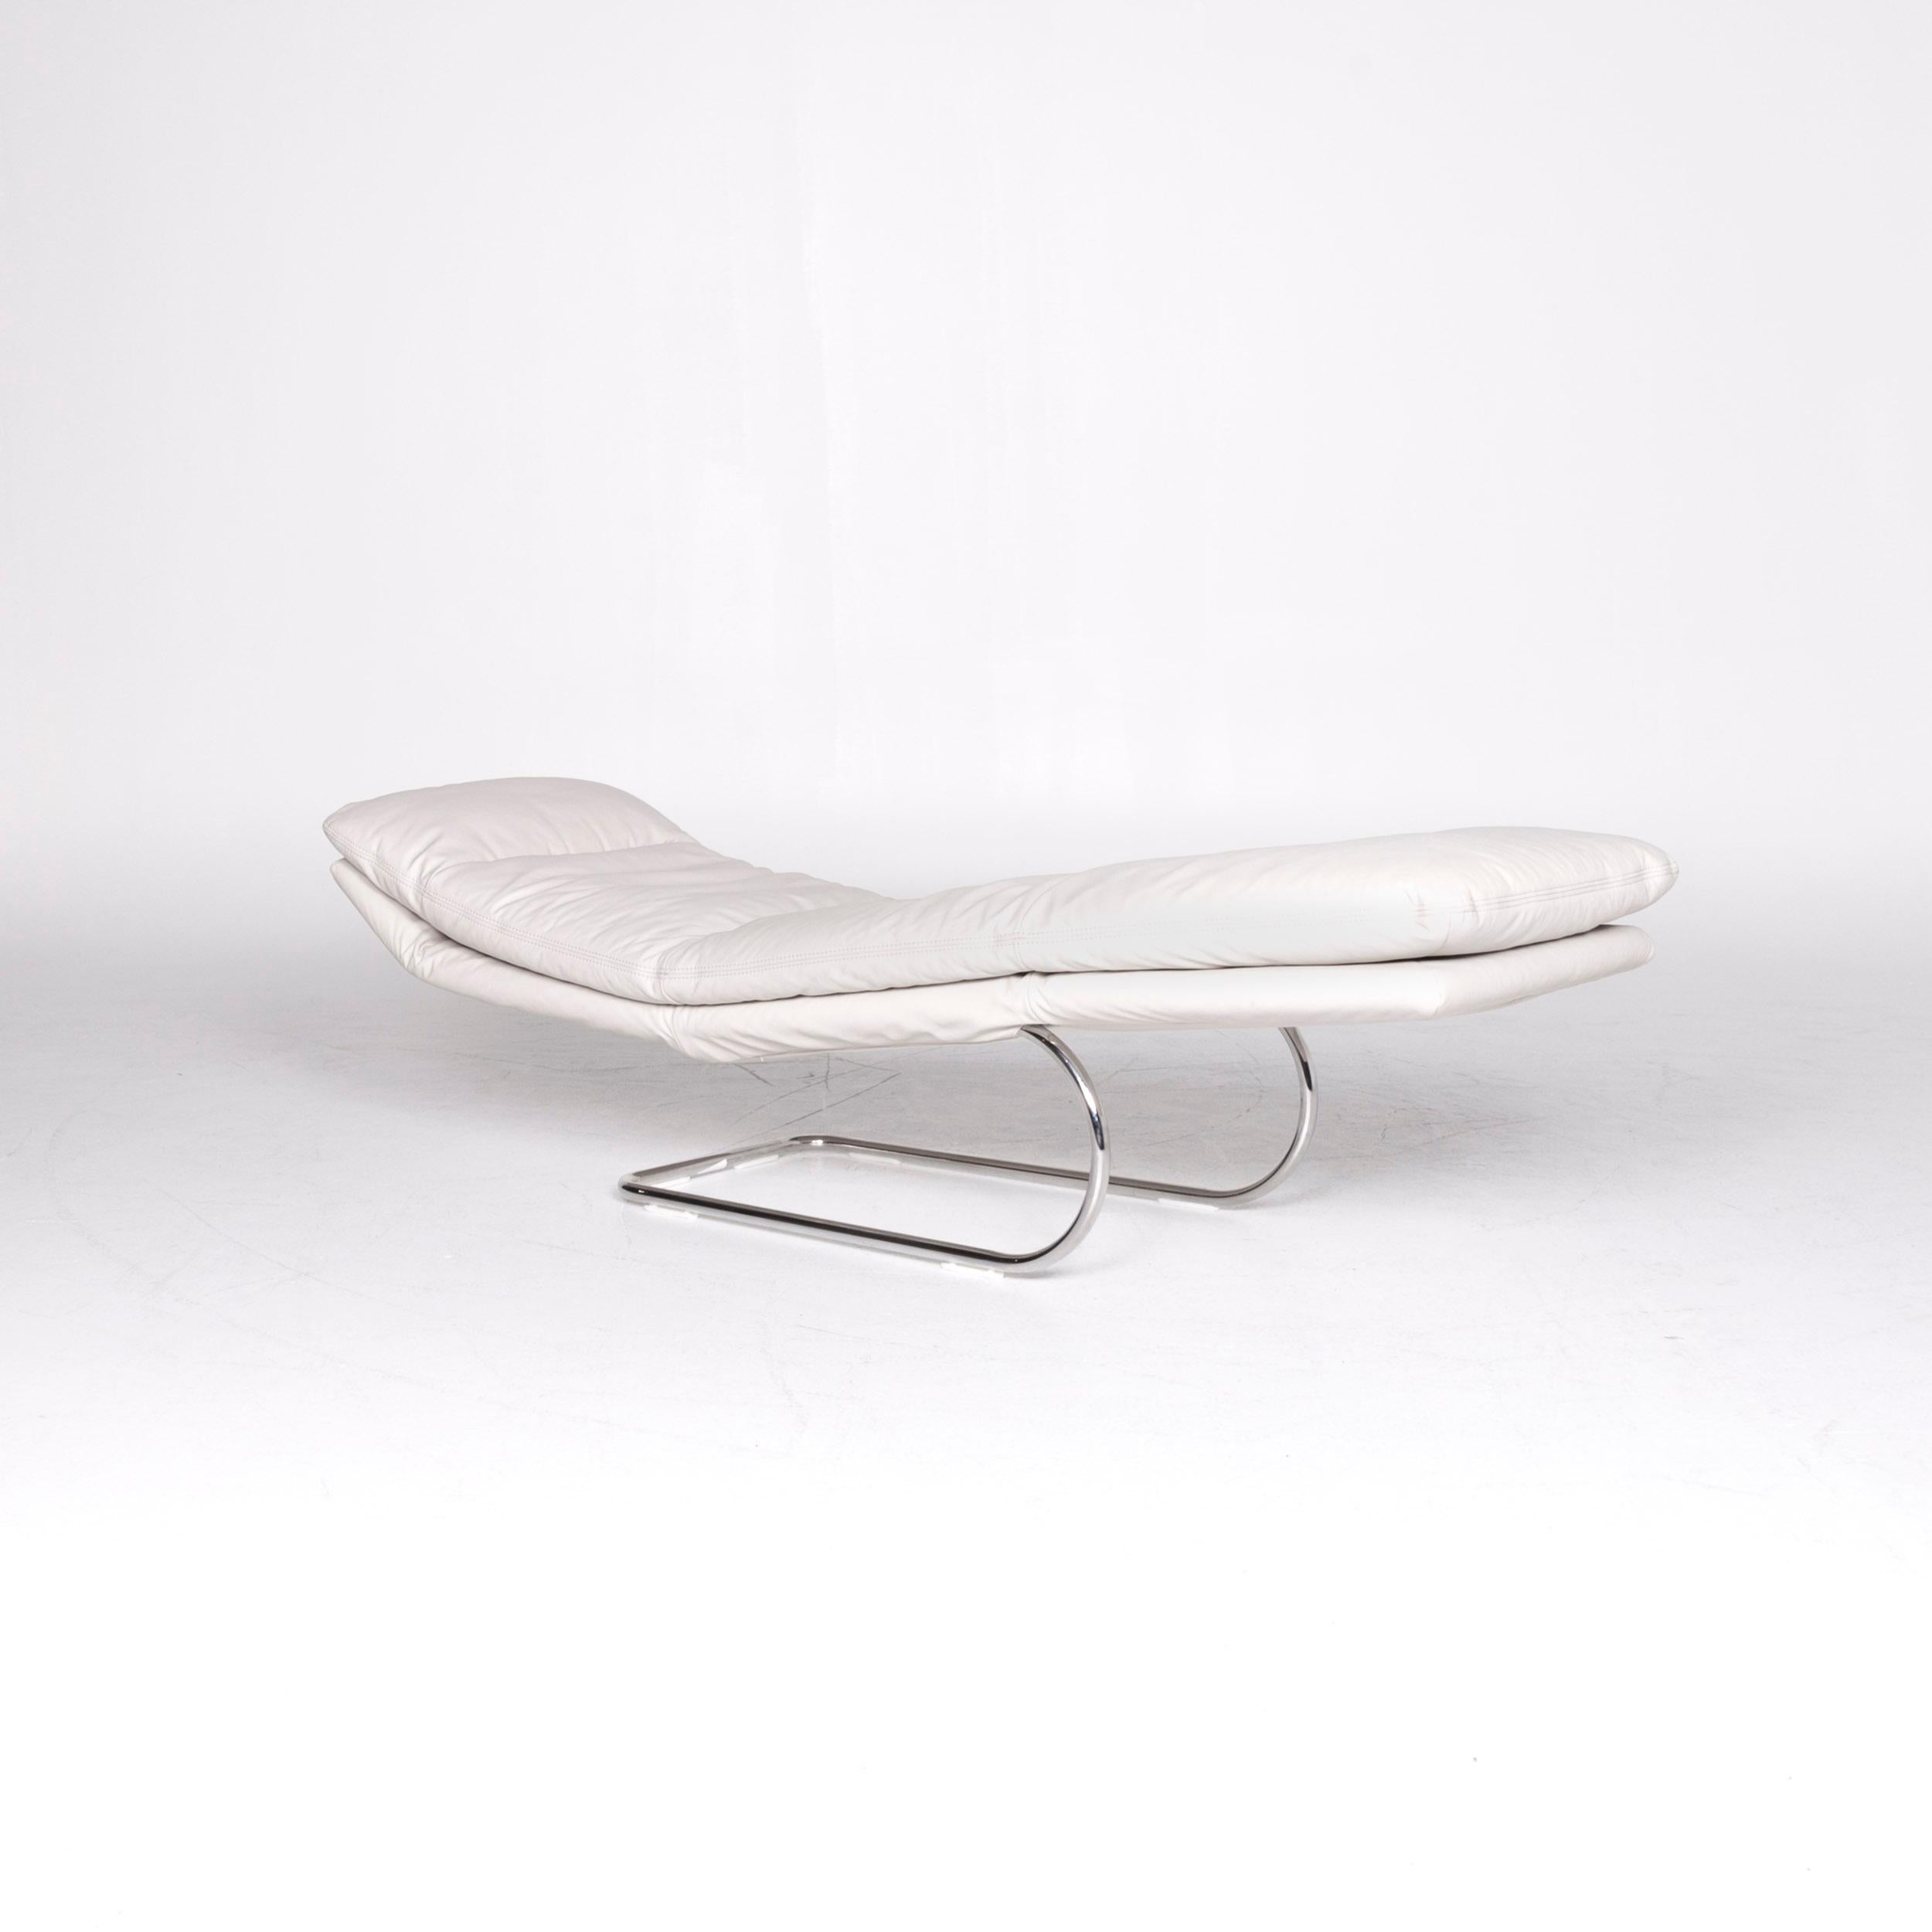 German Willi Schillig Jill Designer Leather Lounger Cream Chair Relax Function